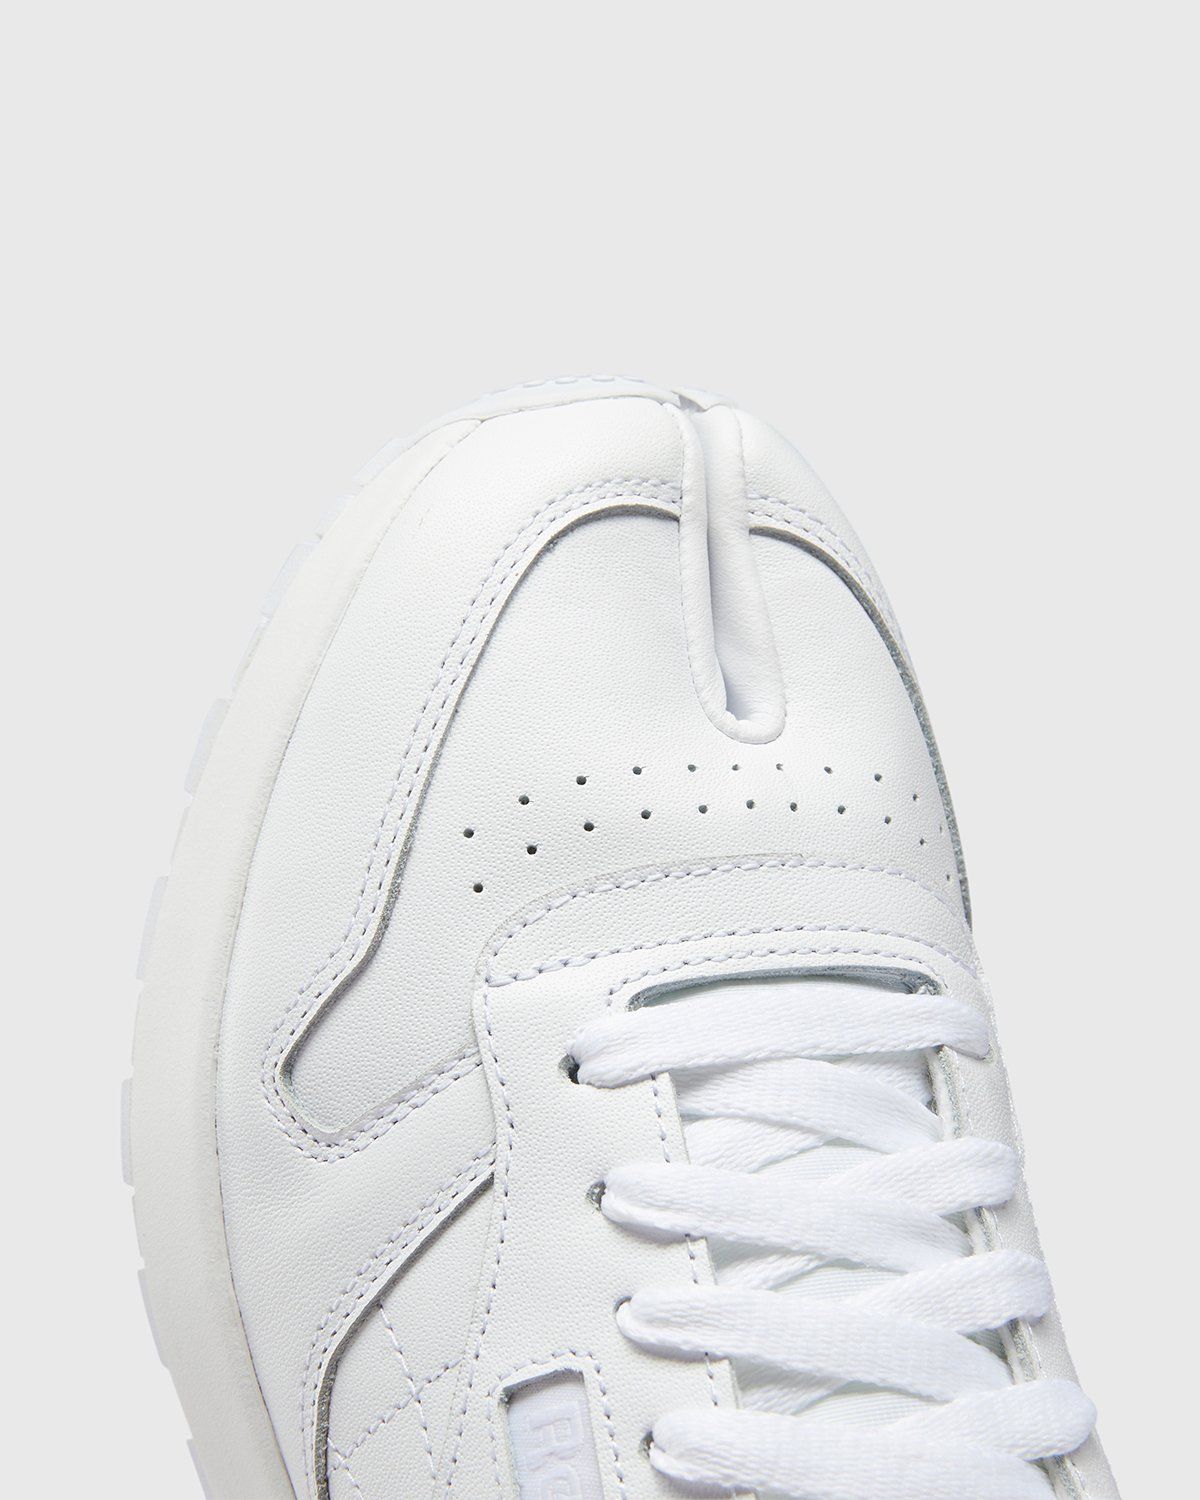 Maison Margiela x Reebok – Classic Leather Tabi White - Low Top Sneakers - White - Image 4